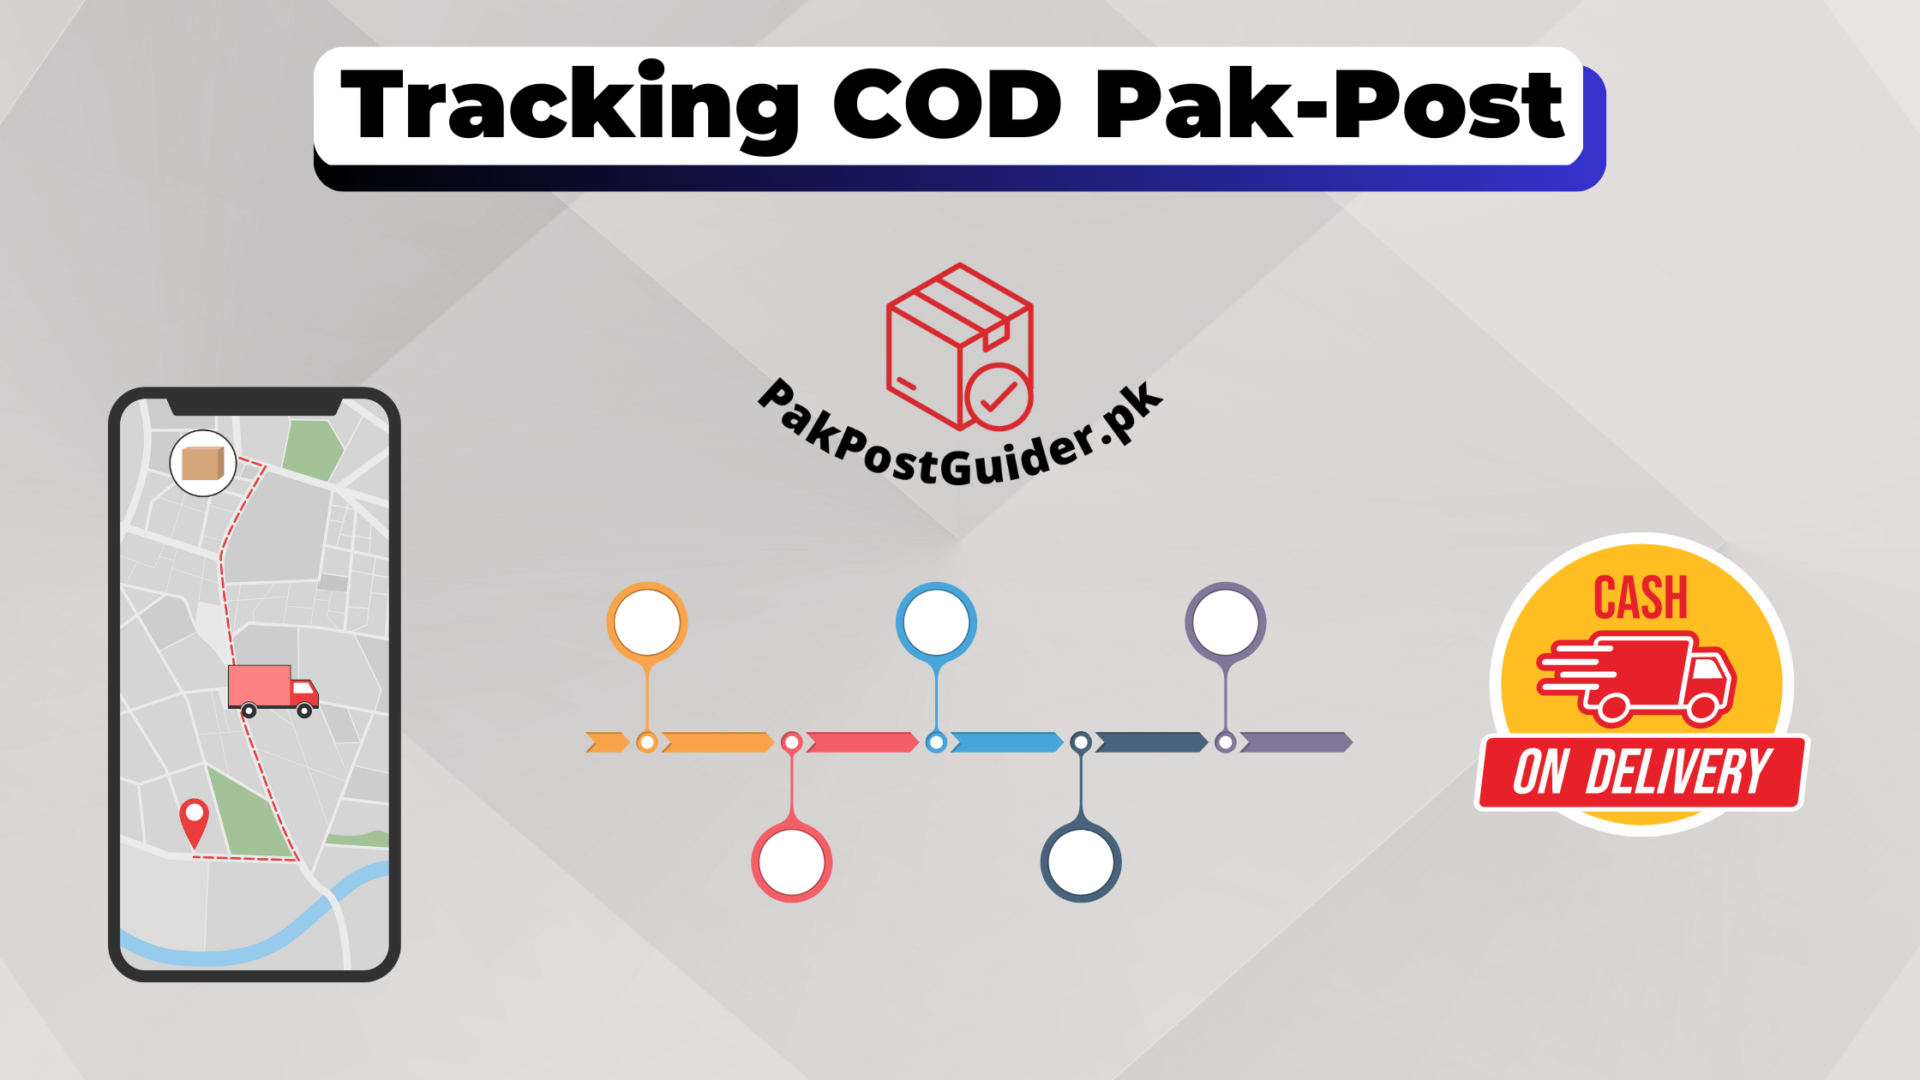 Pakistan post tracking cod